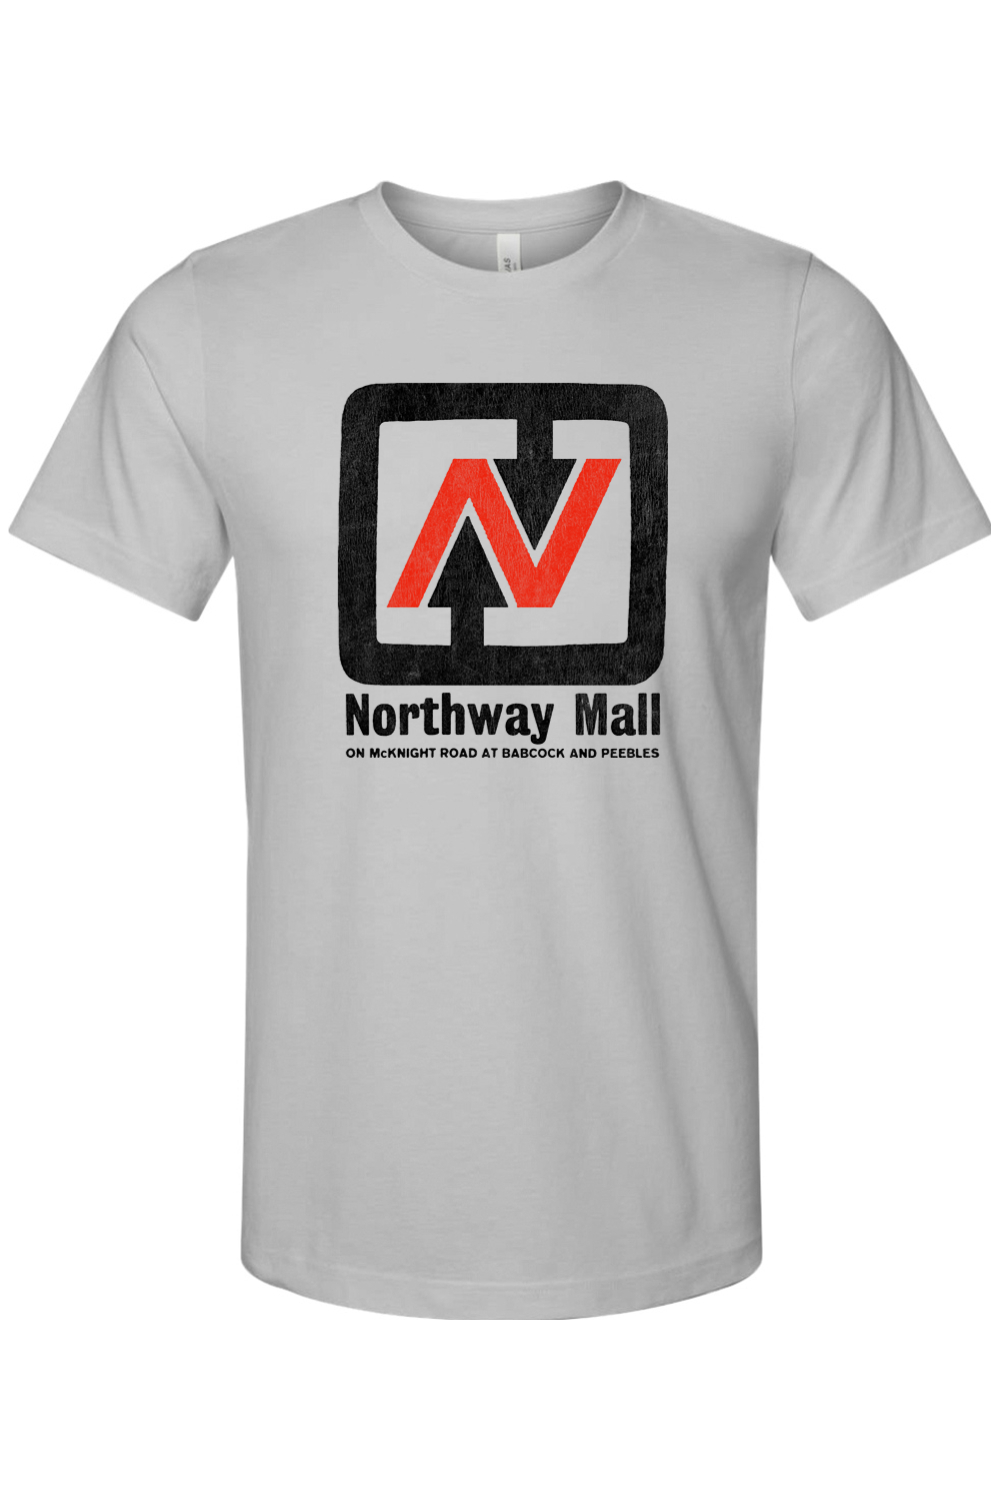 Northway Mall - North Hills - Yinzylvania